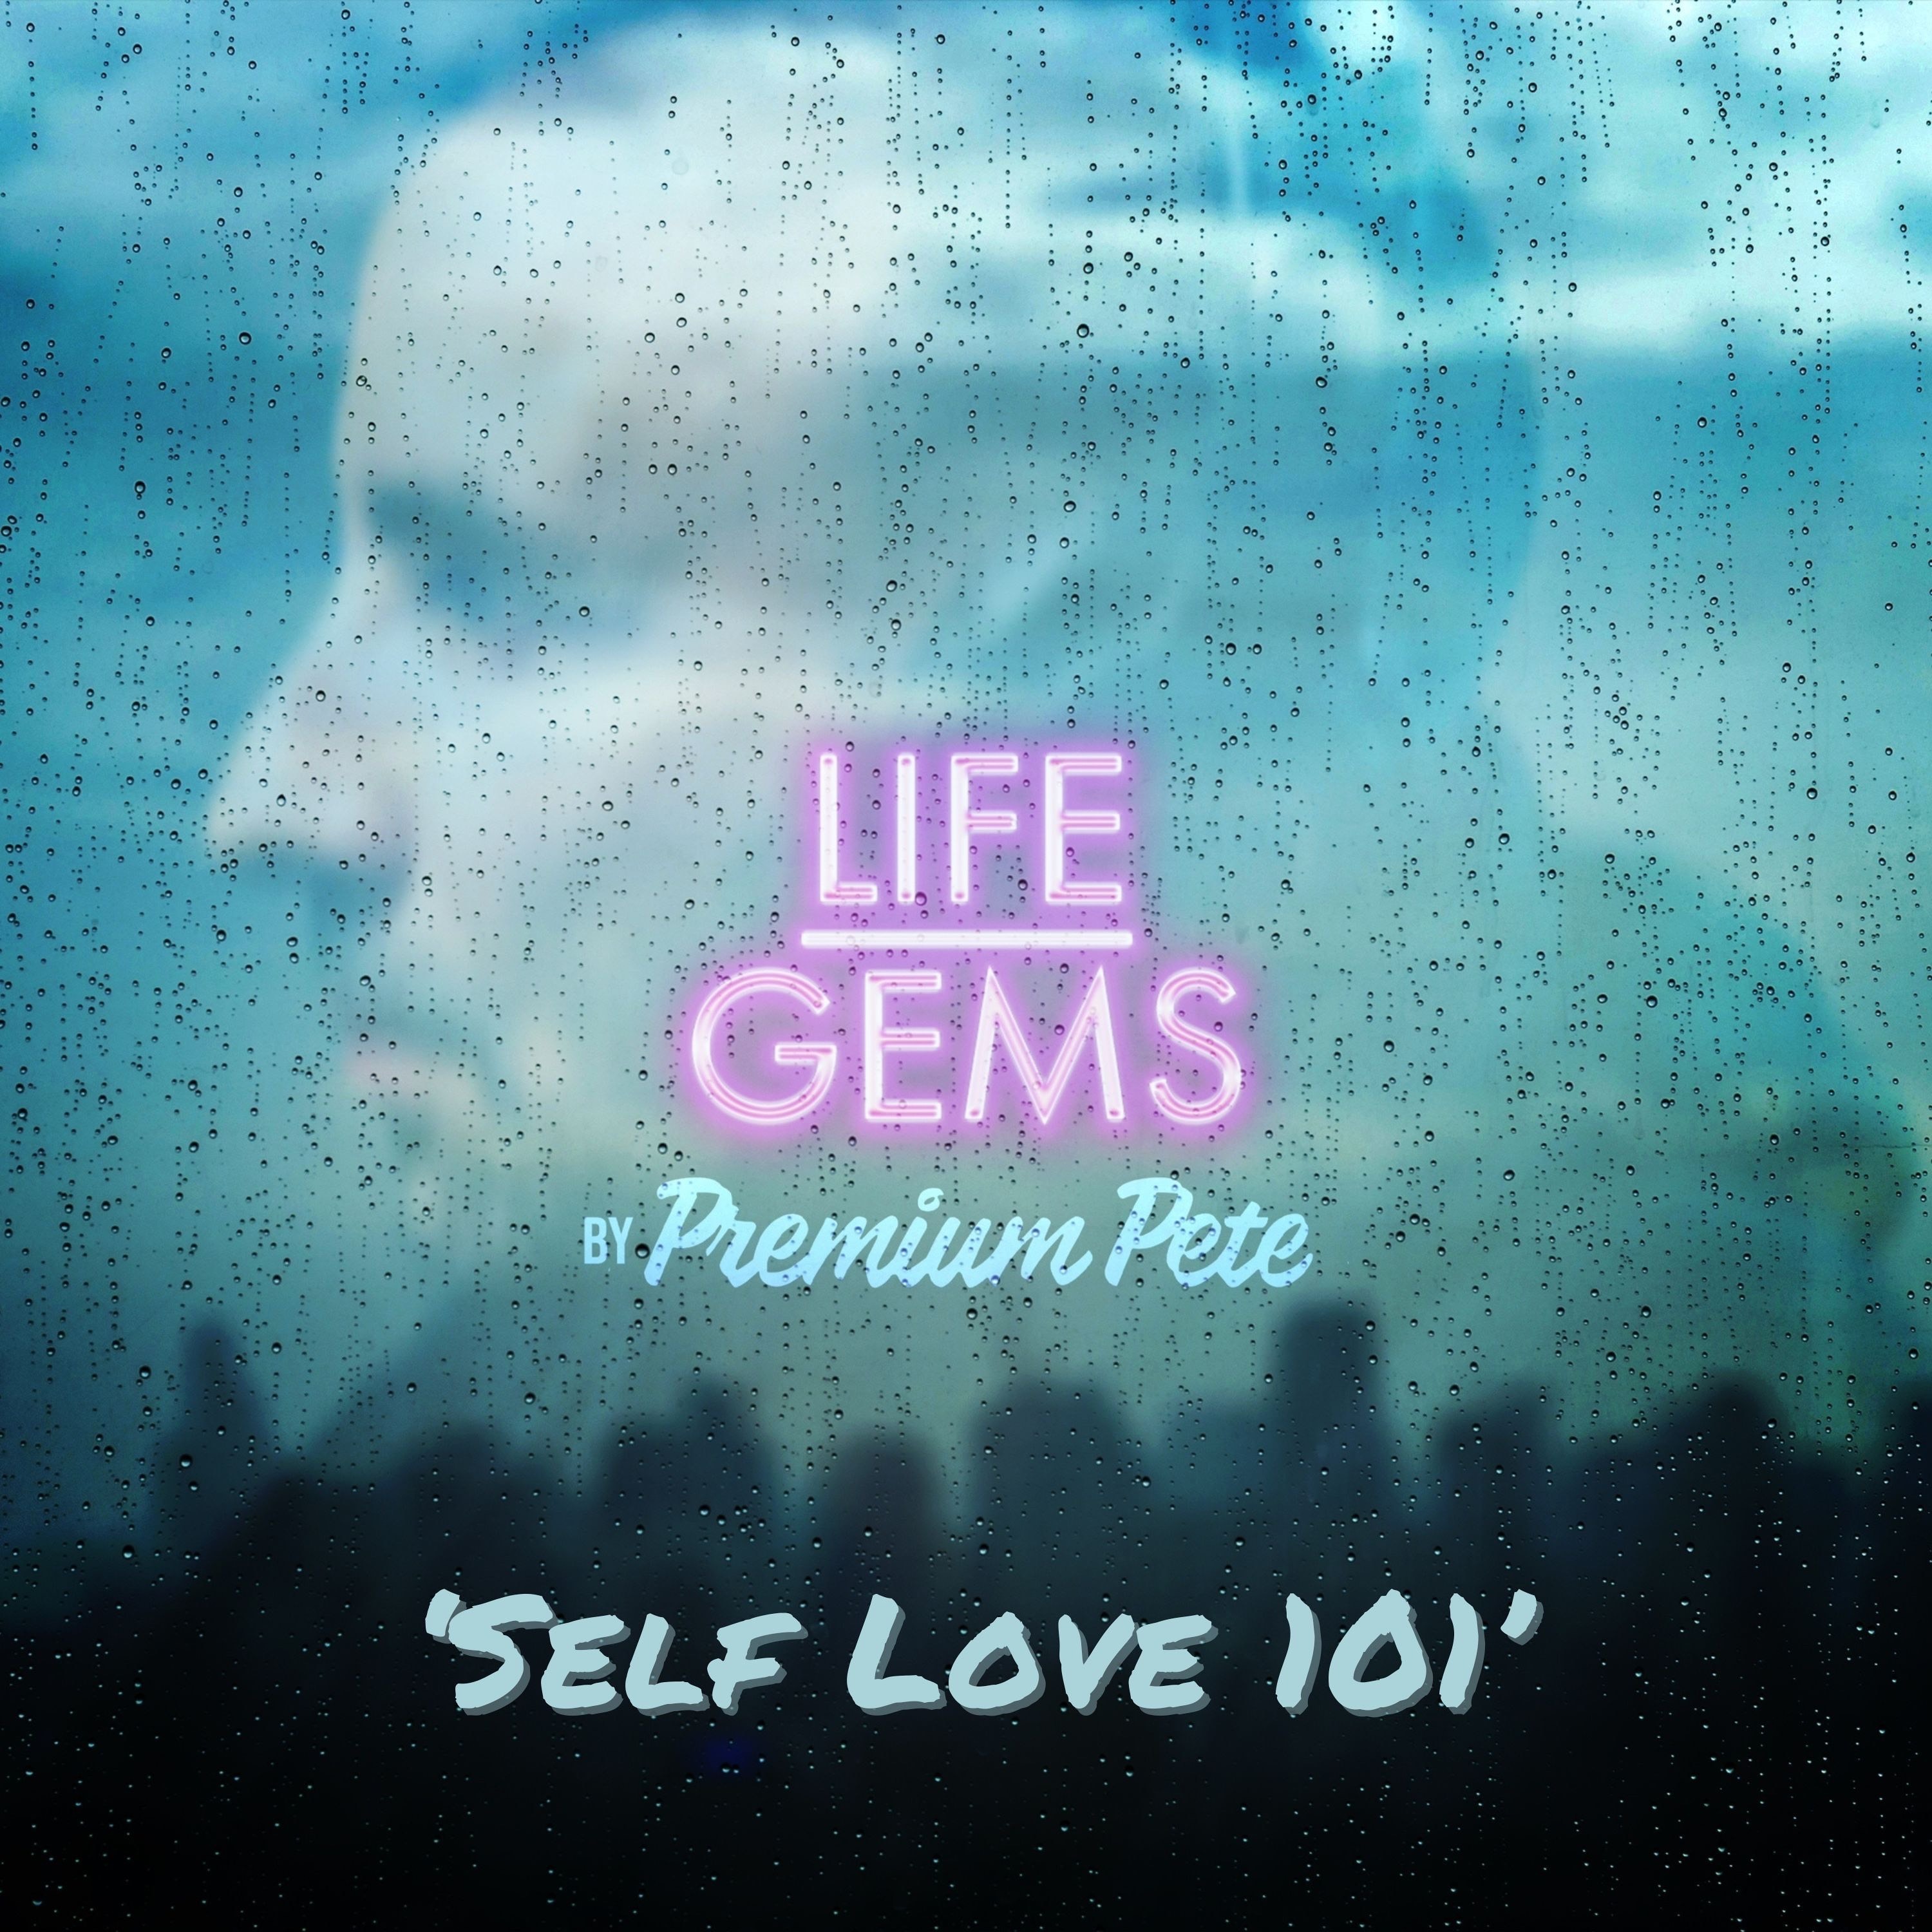 Life Gems "Self Love 101"